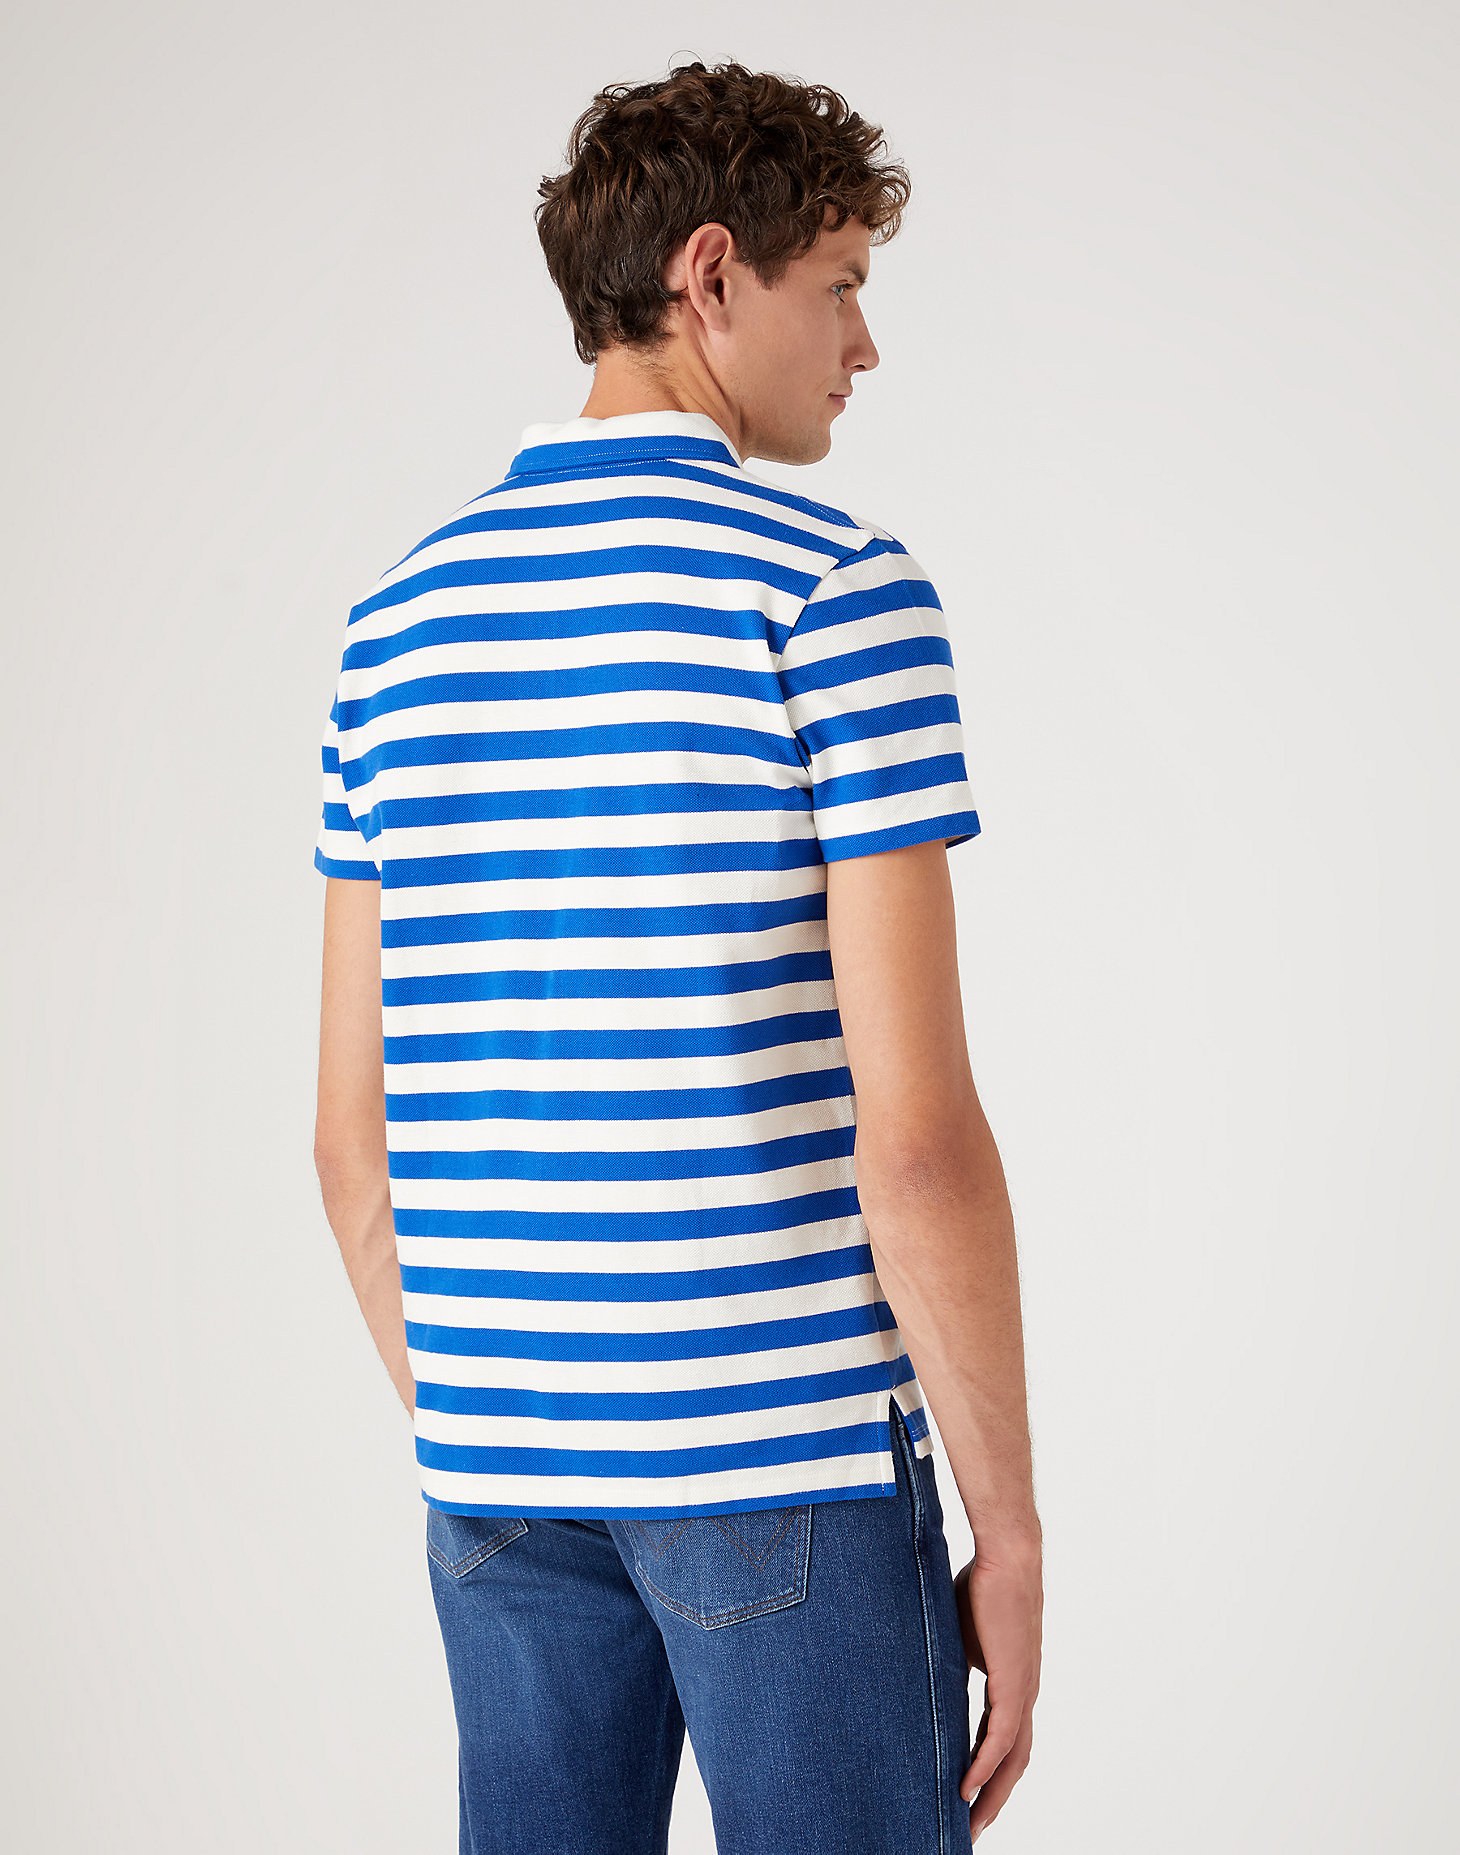 Stripe Polo Shirt in Wrangler Blue alternative view 2